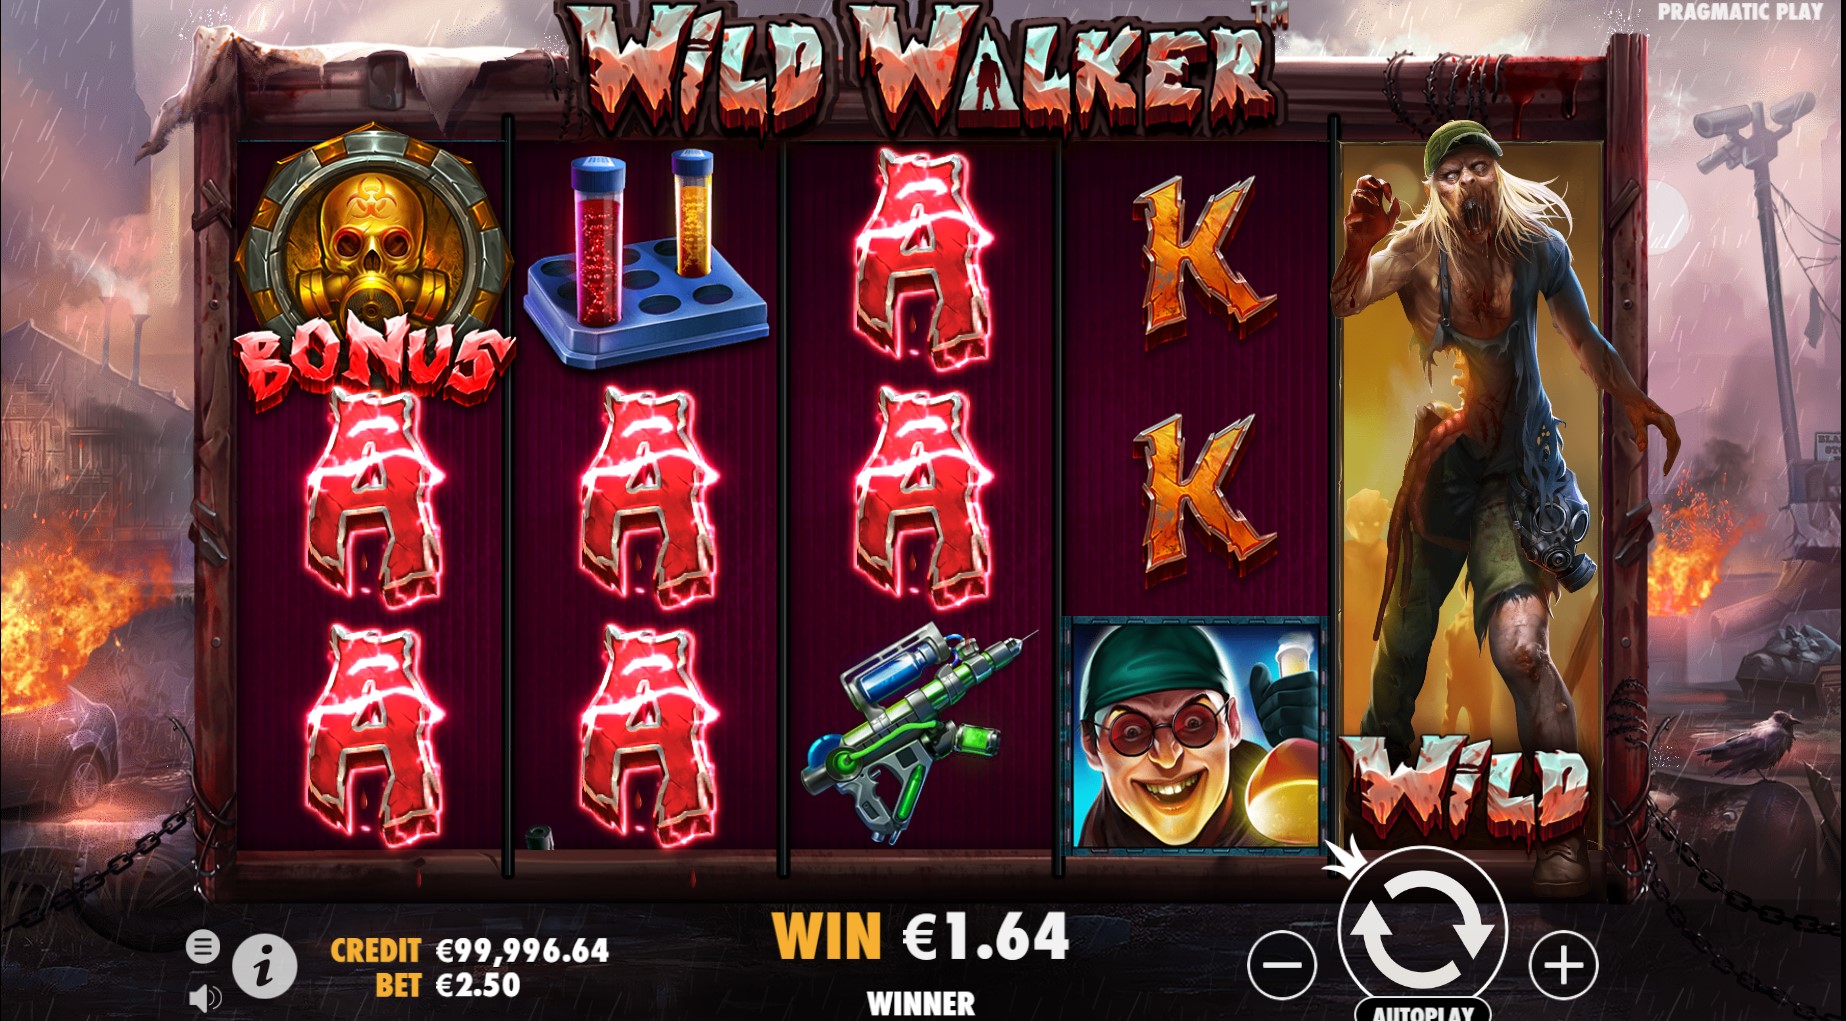 Wild Walker 3 Pragmatic Play